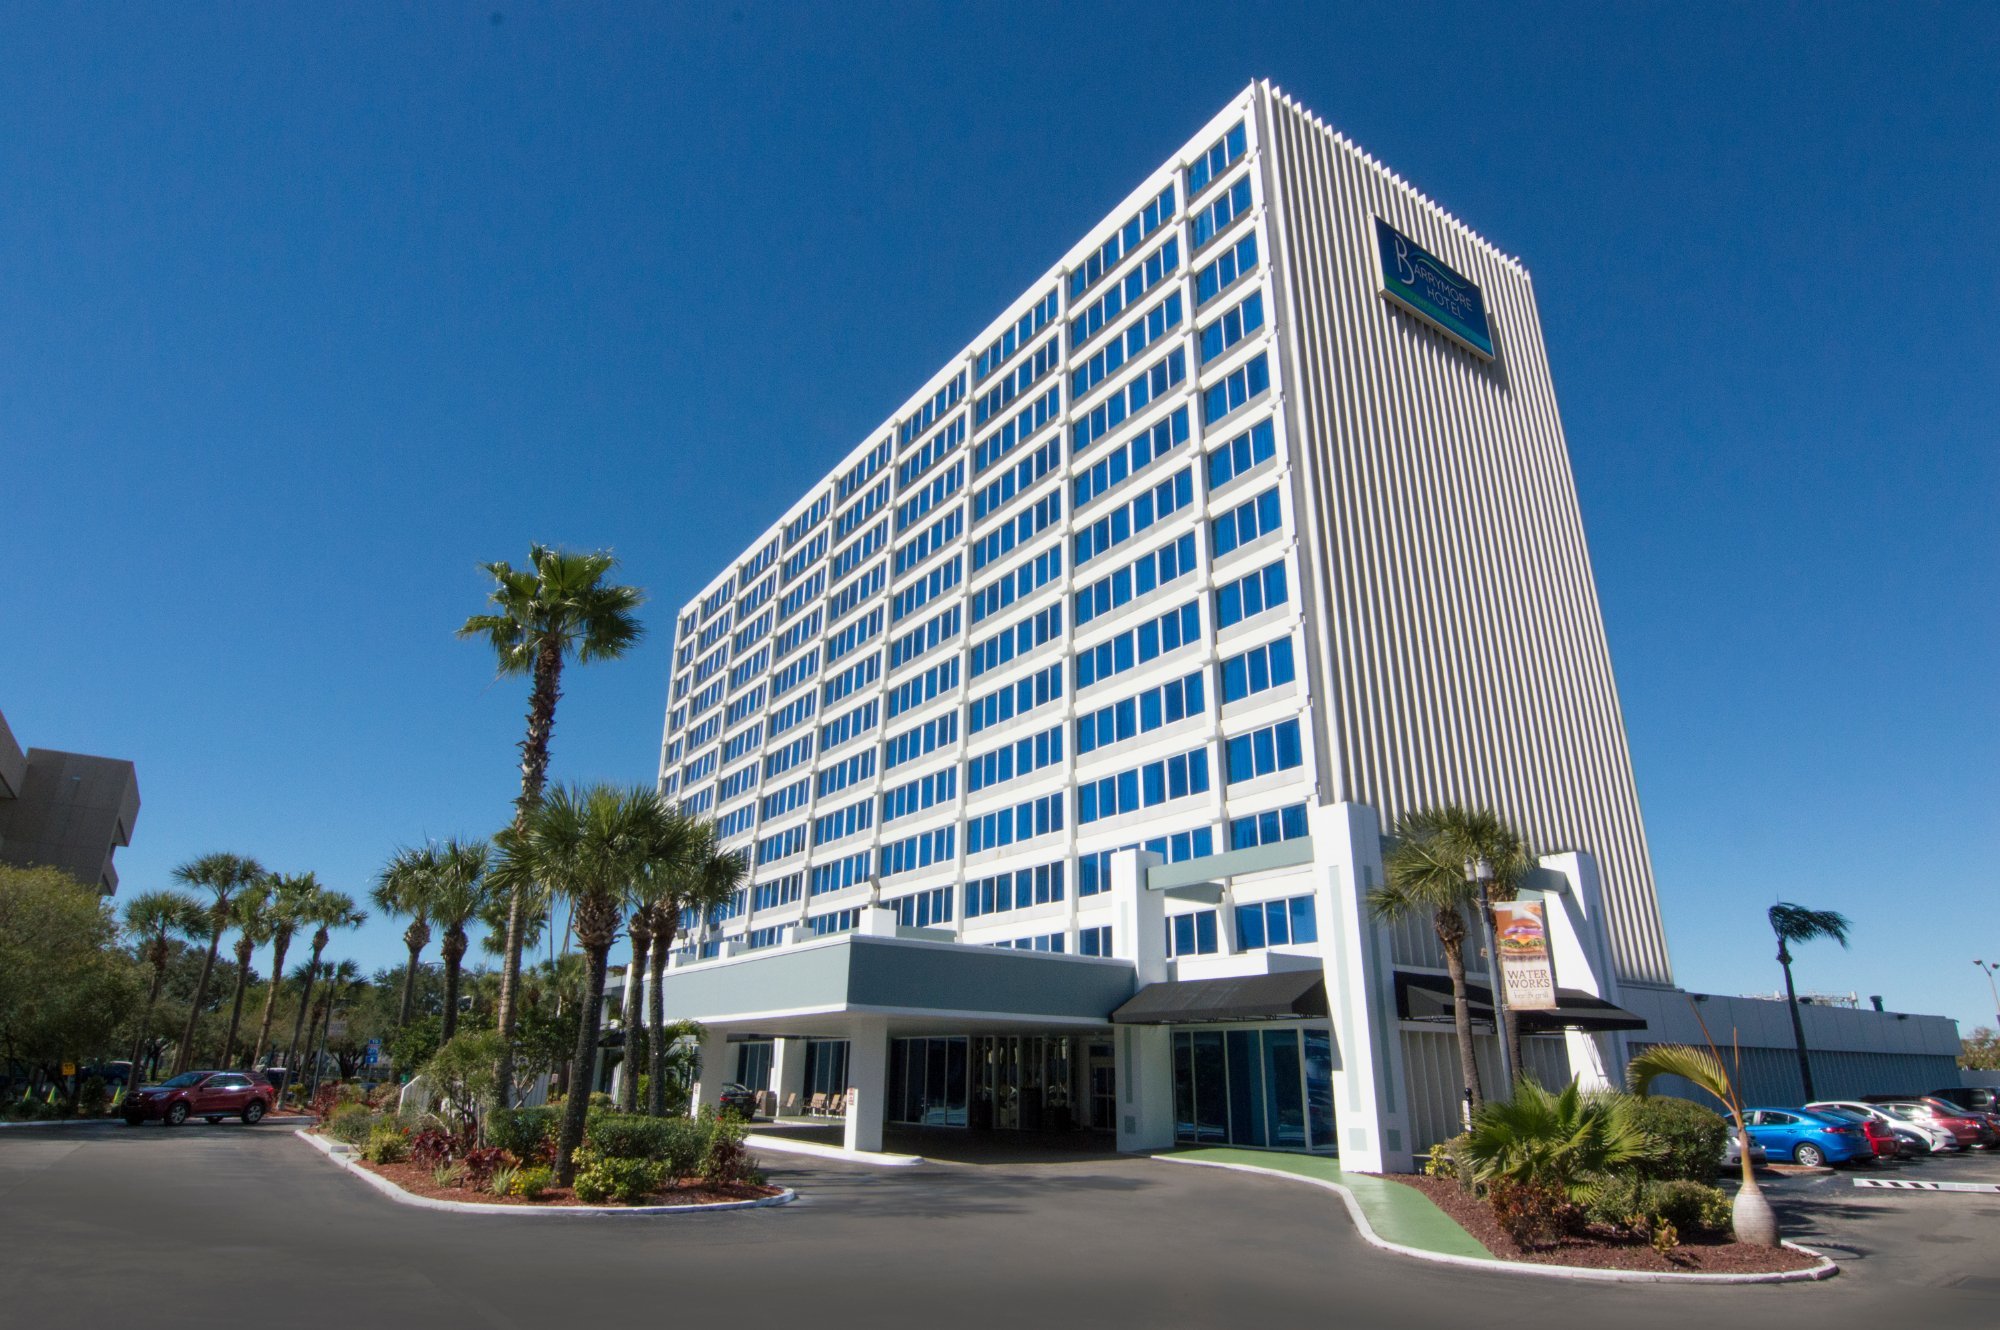 Photo of Barrymore Hotel Tampa Riverwalk, Tampa, FL